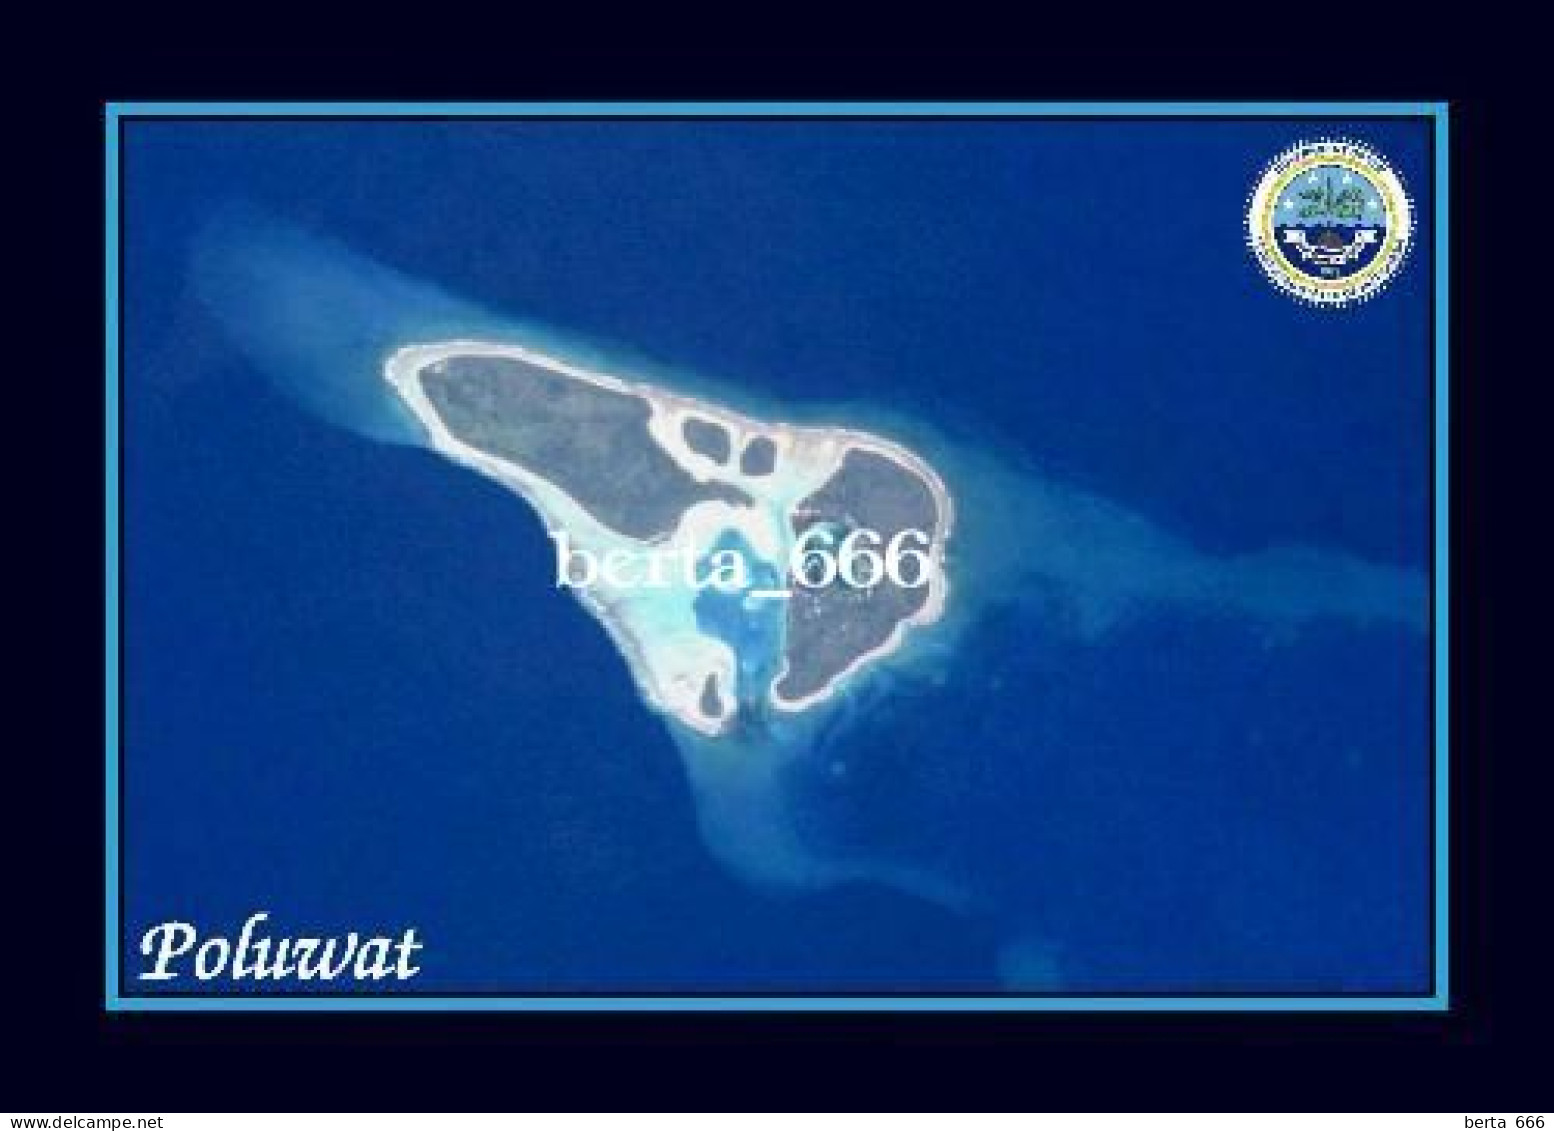 Micronesia Caroline Islands Poluwat Atoll New Postcard - Mikronesien